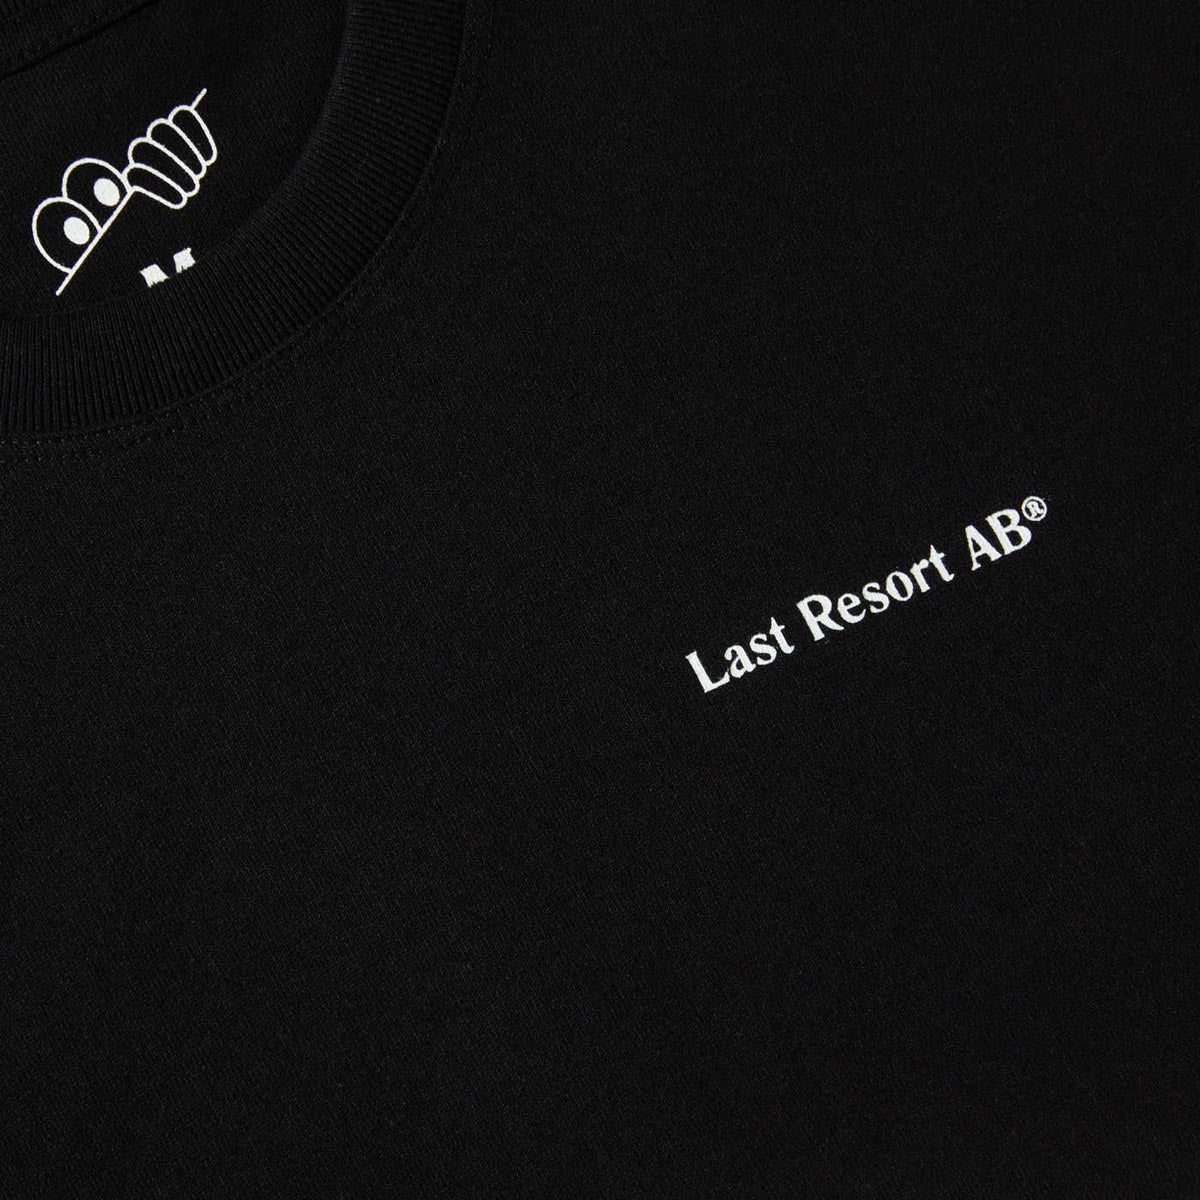 Last Resort AB Atlas Monogram T-Shirt - Black/White image 3